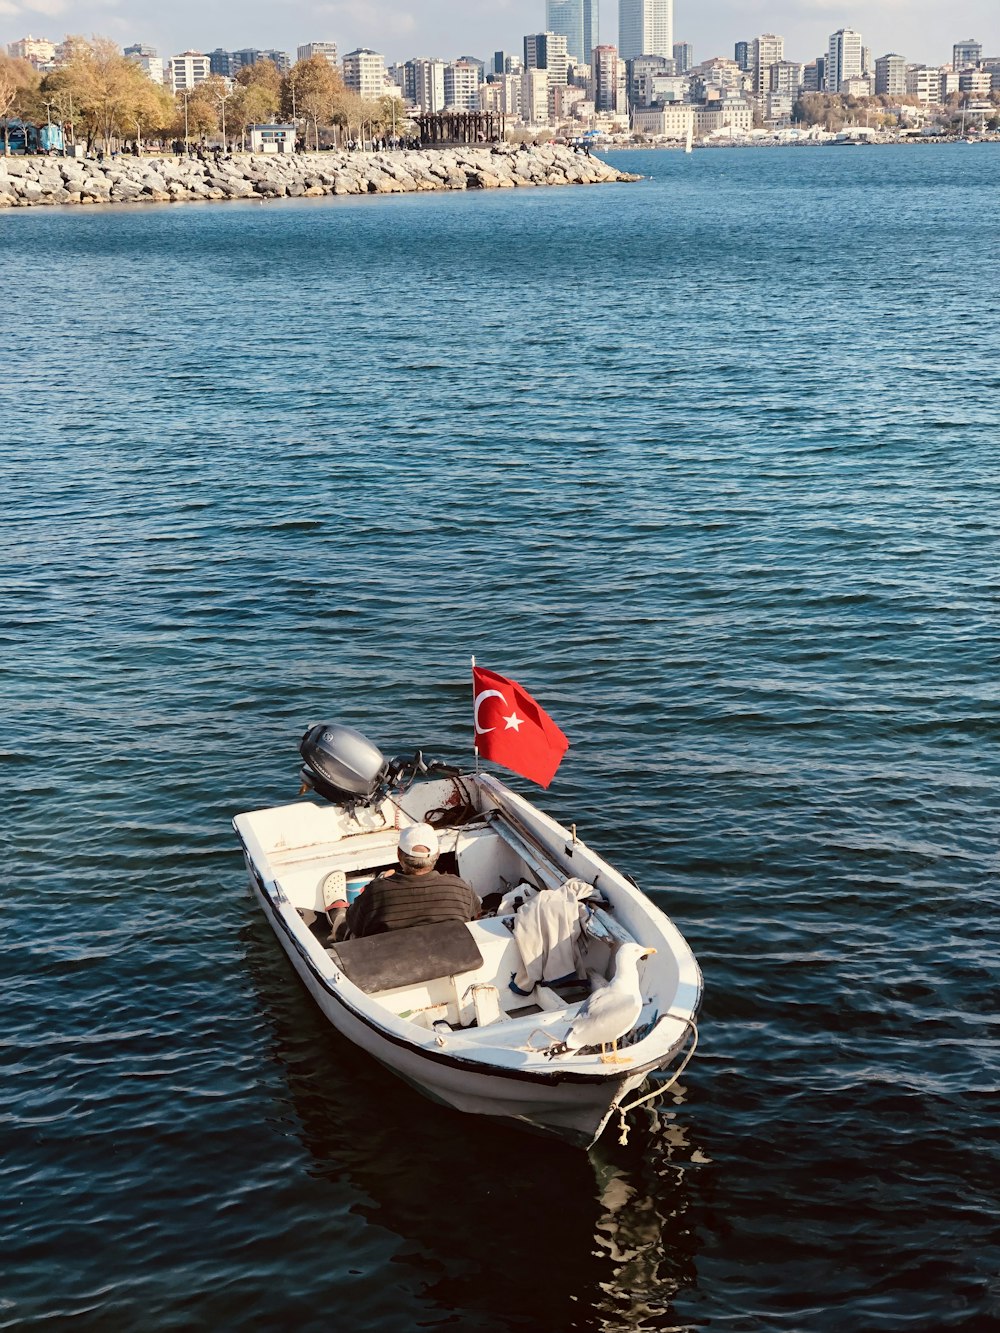 a person in a boat